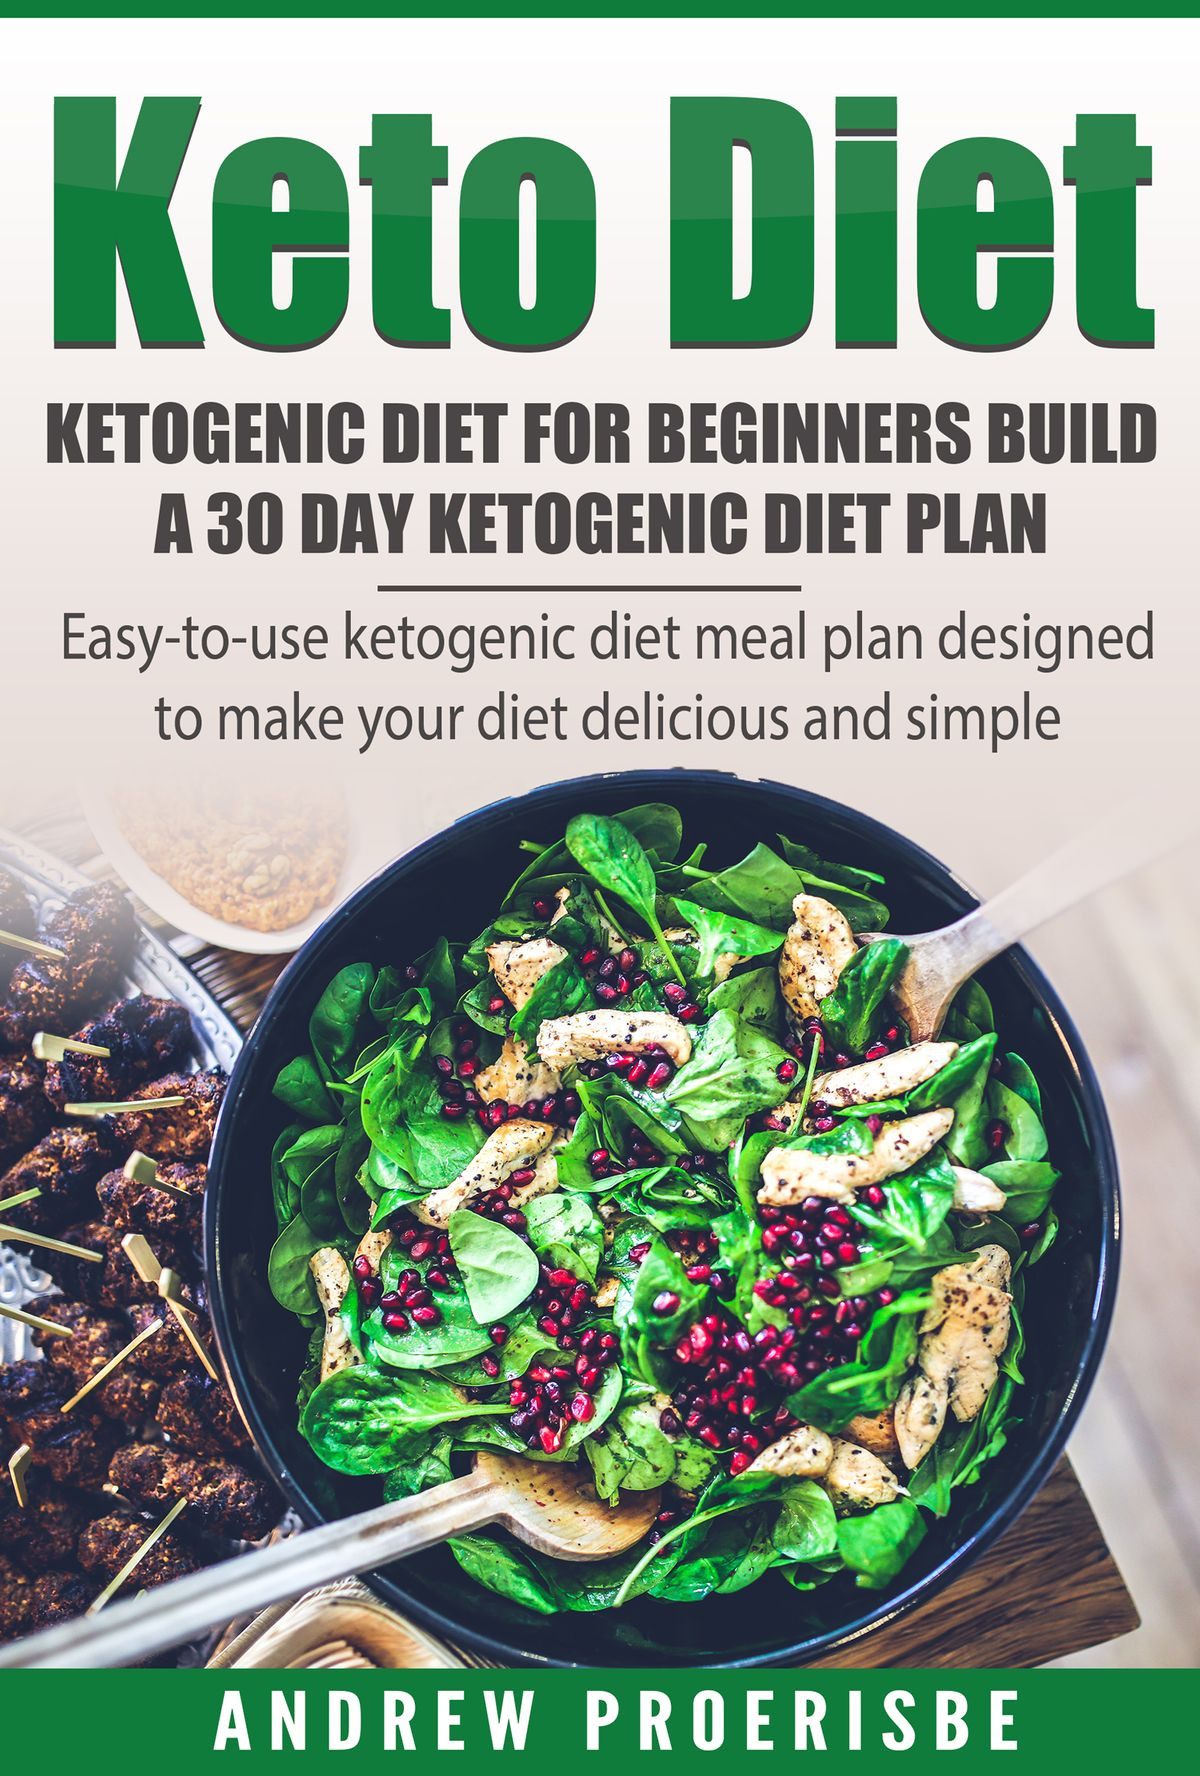 Best Keto Diet For Beginners
 Keto Diet Ketogenic Diet for Beginners Build A 30 Day